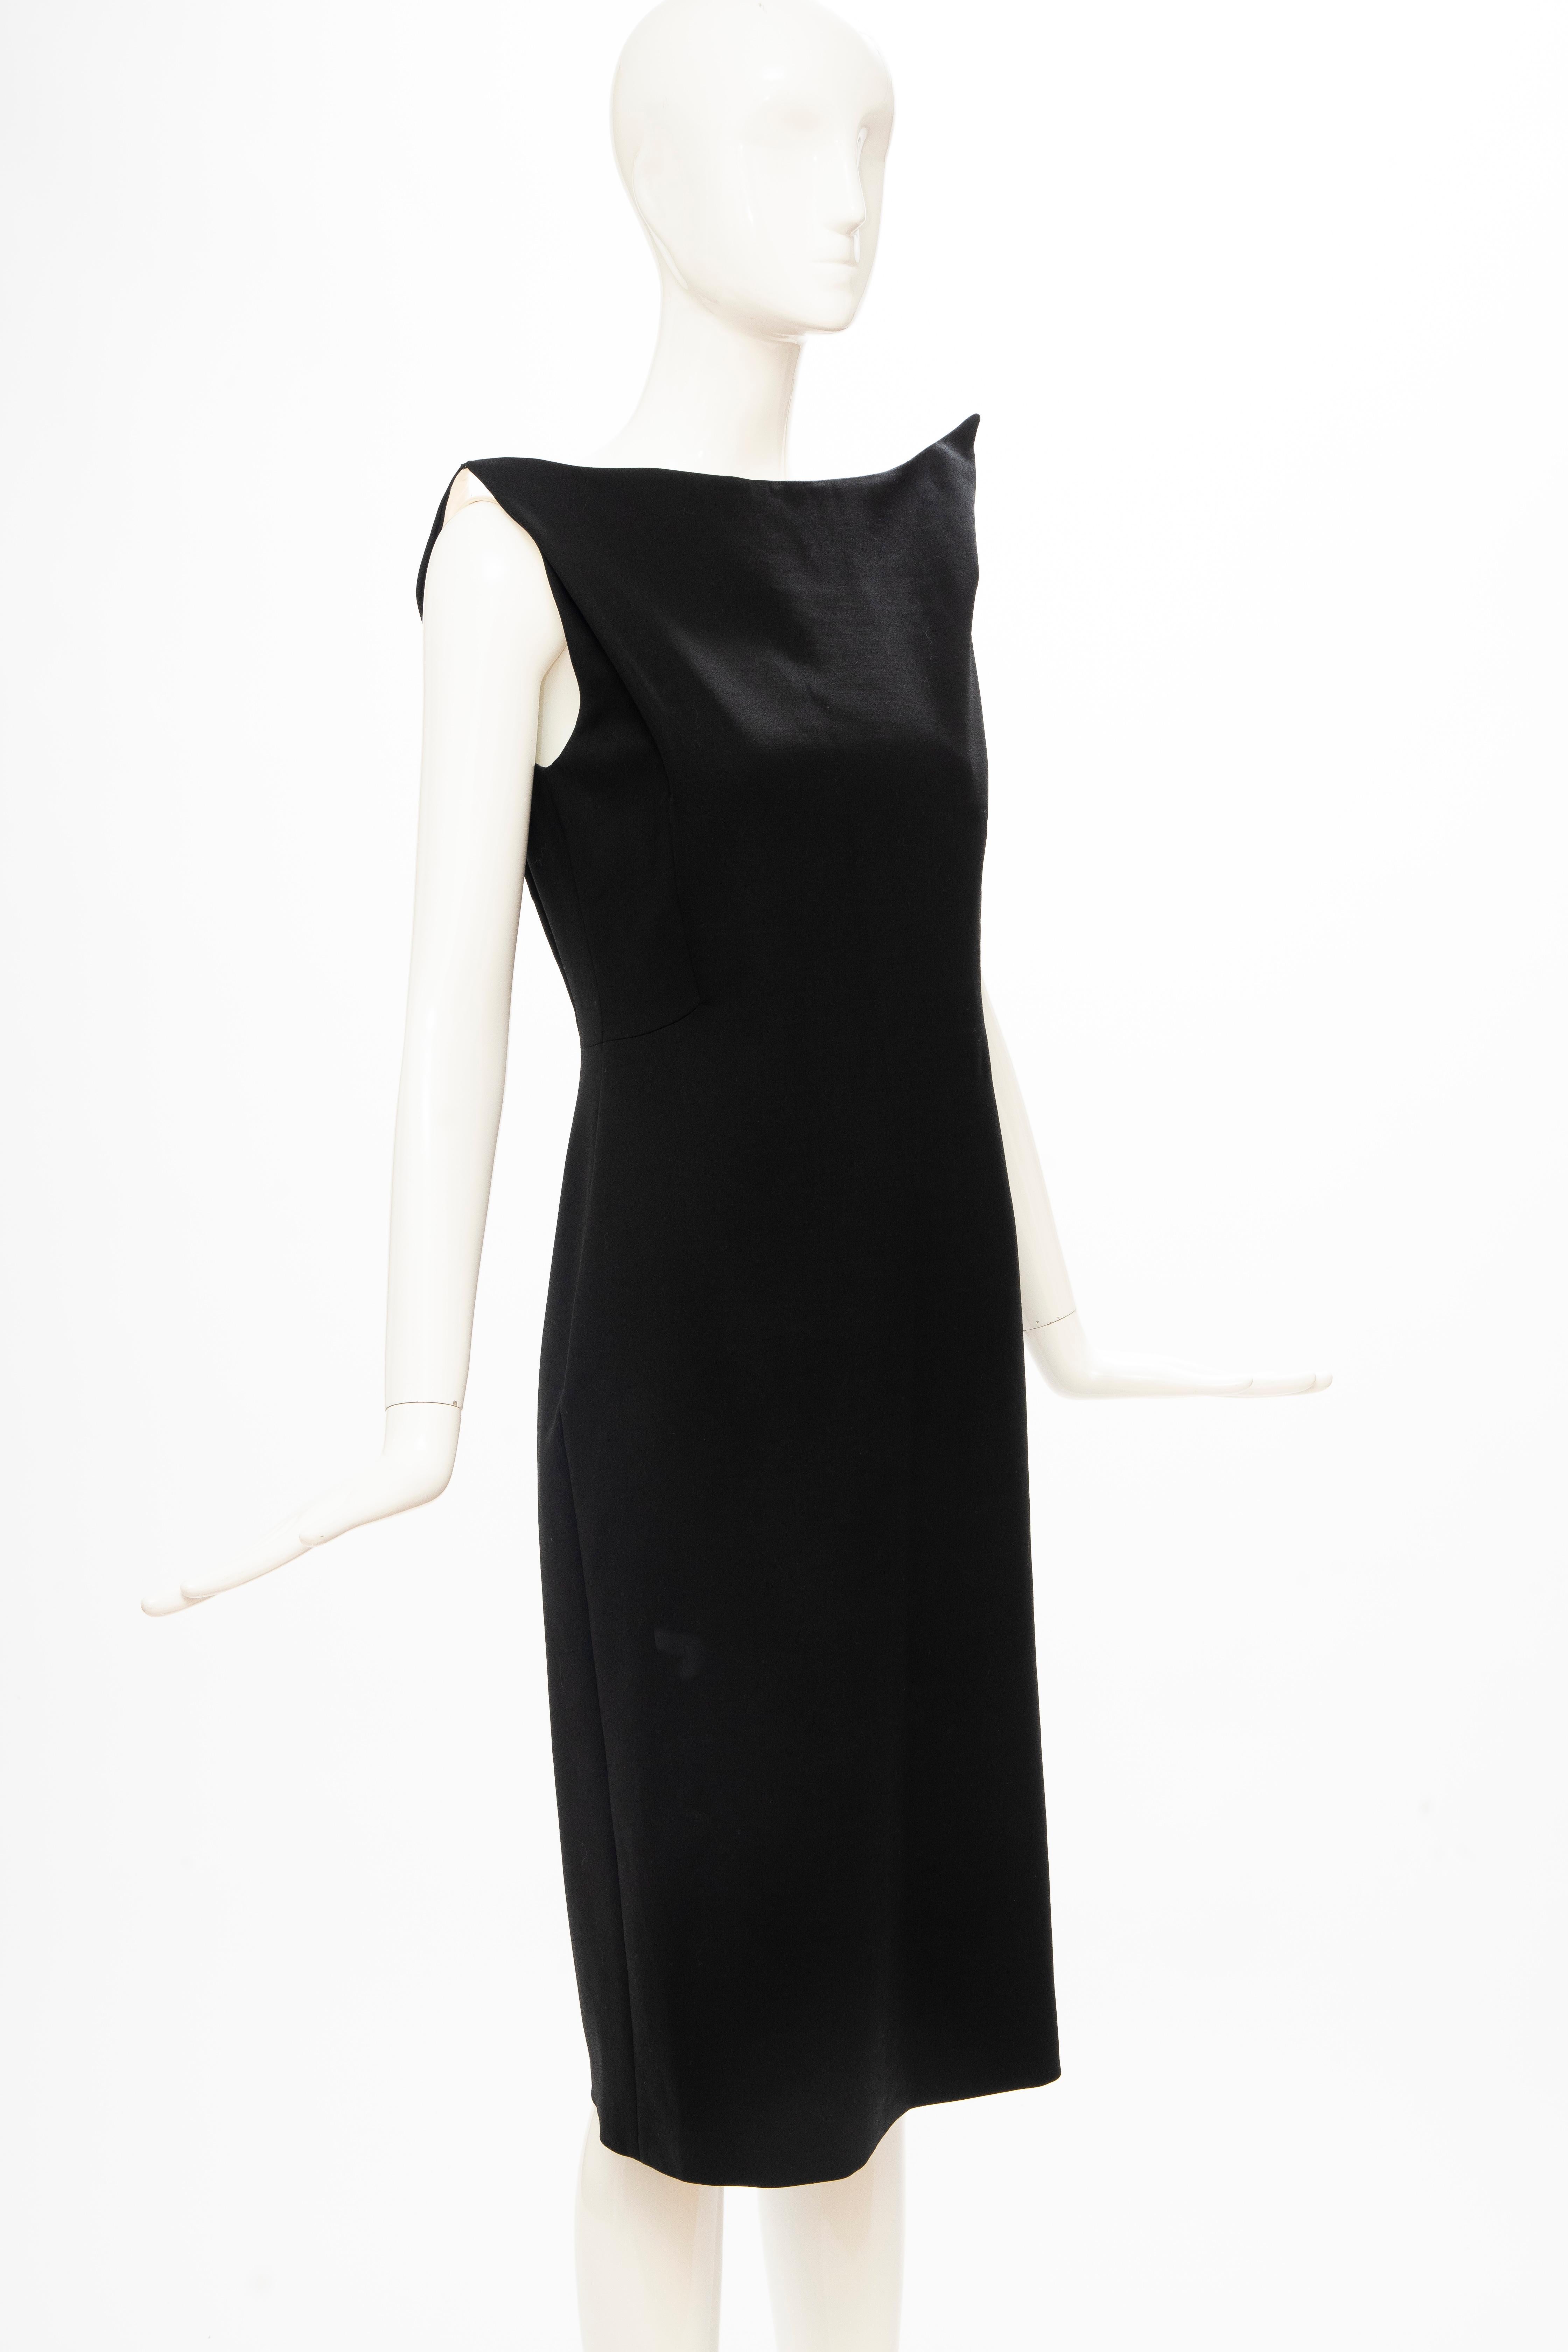 Raf Simons for Jil Sander Runway Black Wool Sculptural Evening Dress, Fall 2009 For Sale 3